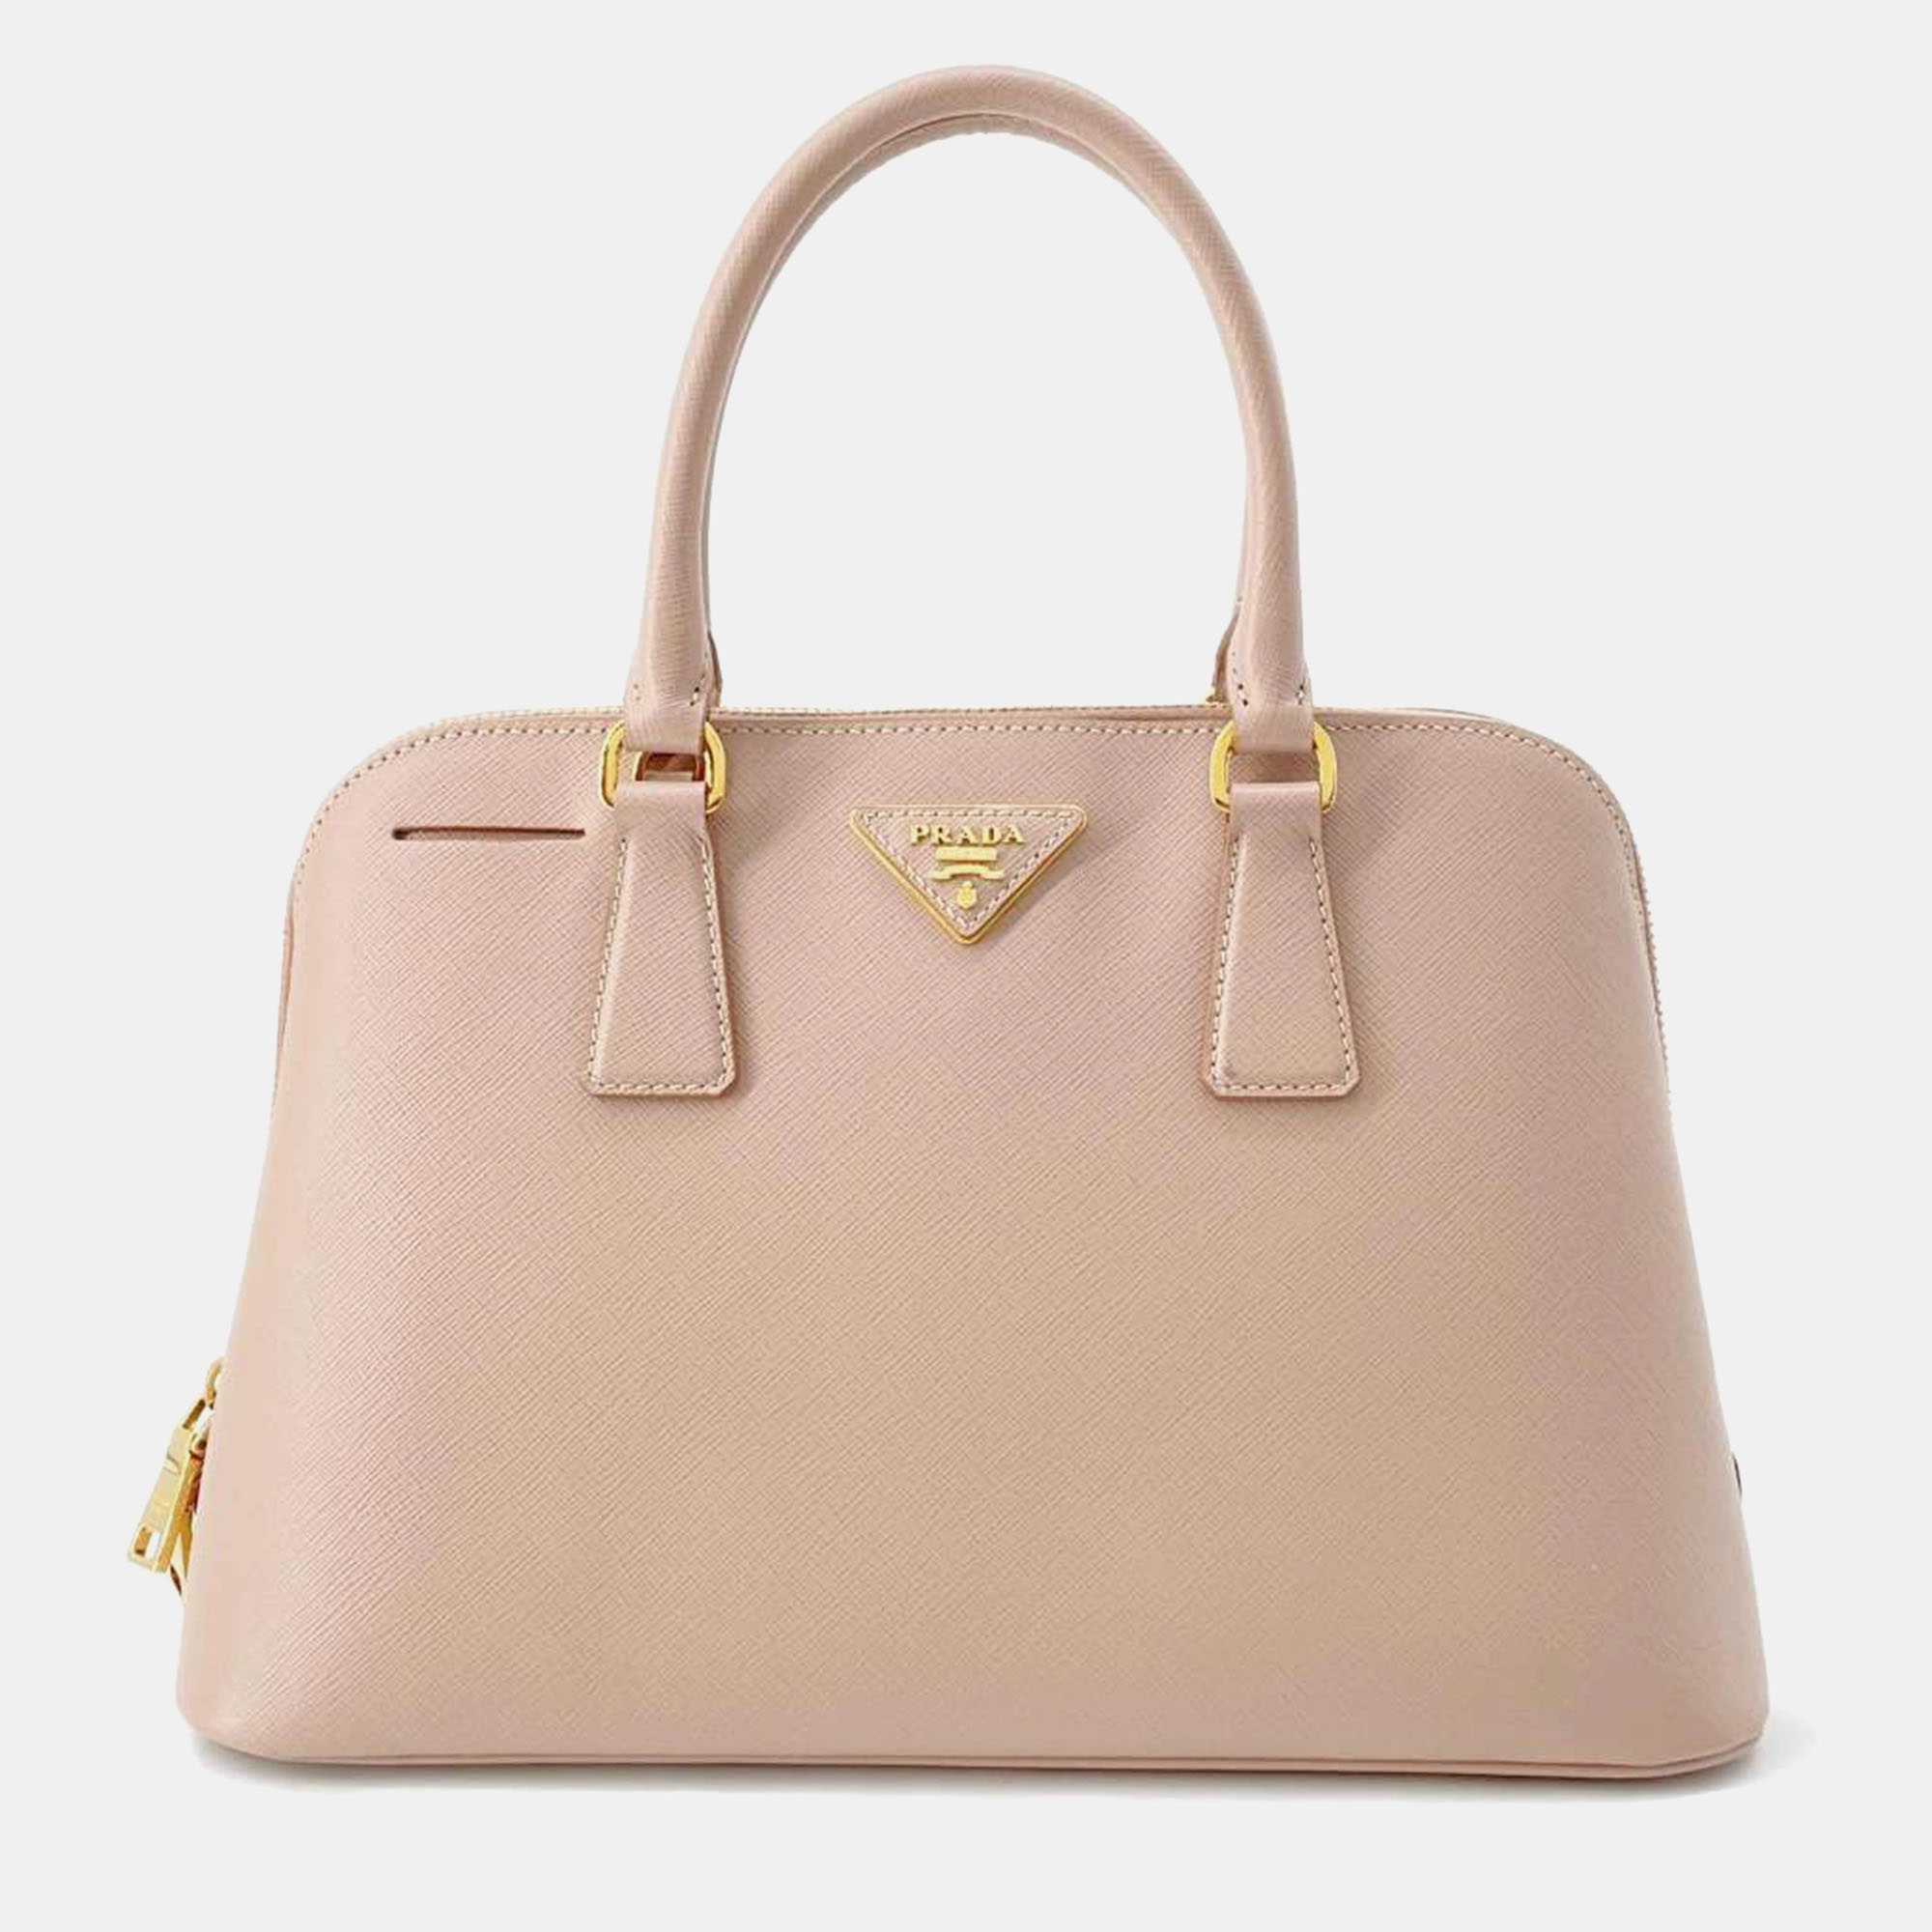 Prada pink saffiano leather tote bag